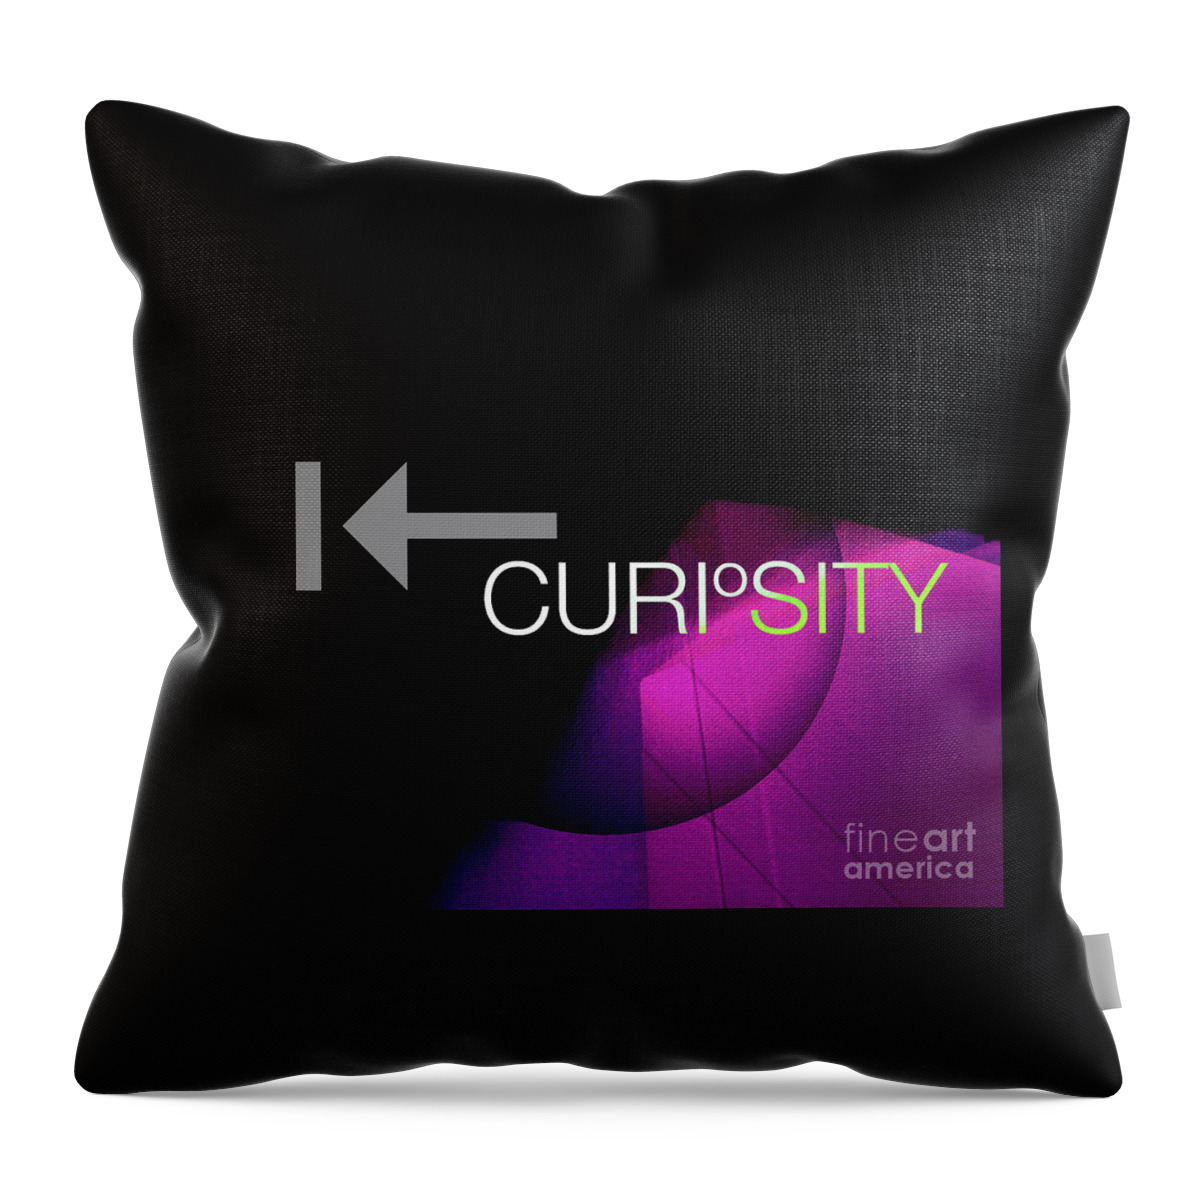 Nag004321k Throw Pillow featuring the digital art Curiosity by Edmund Nagele FRPS